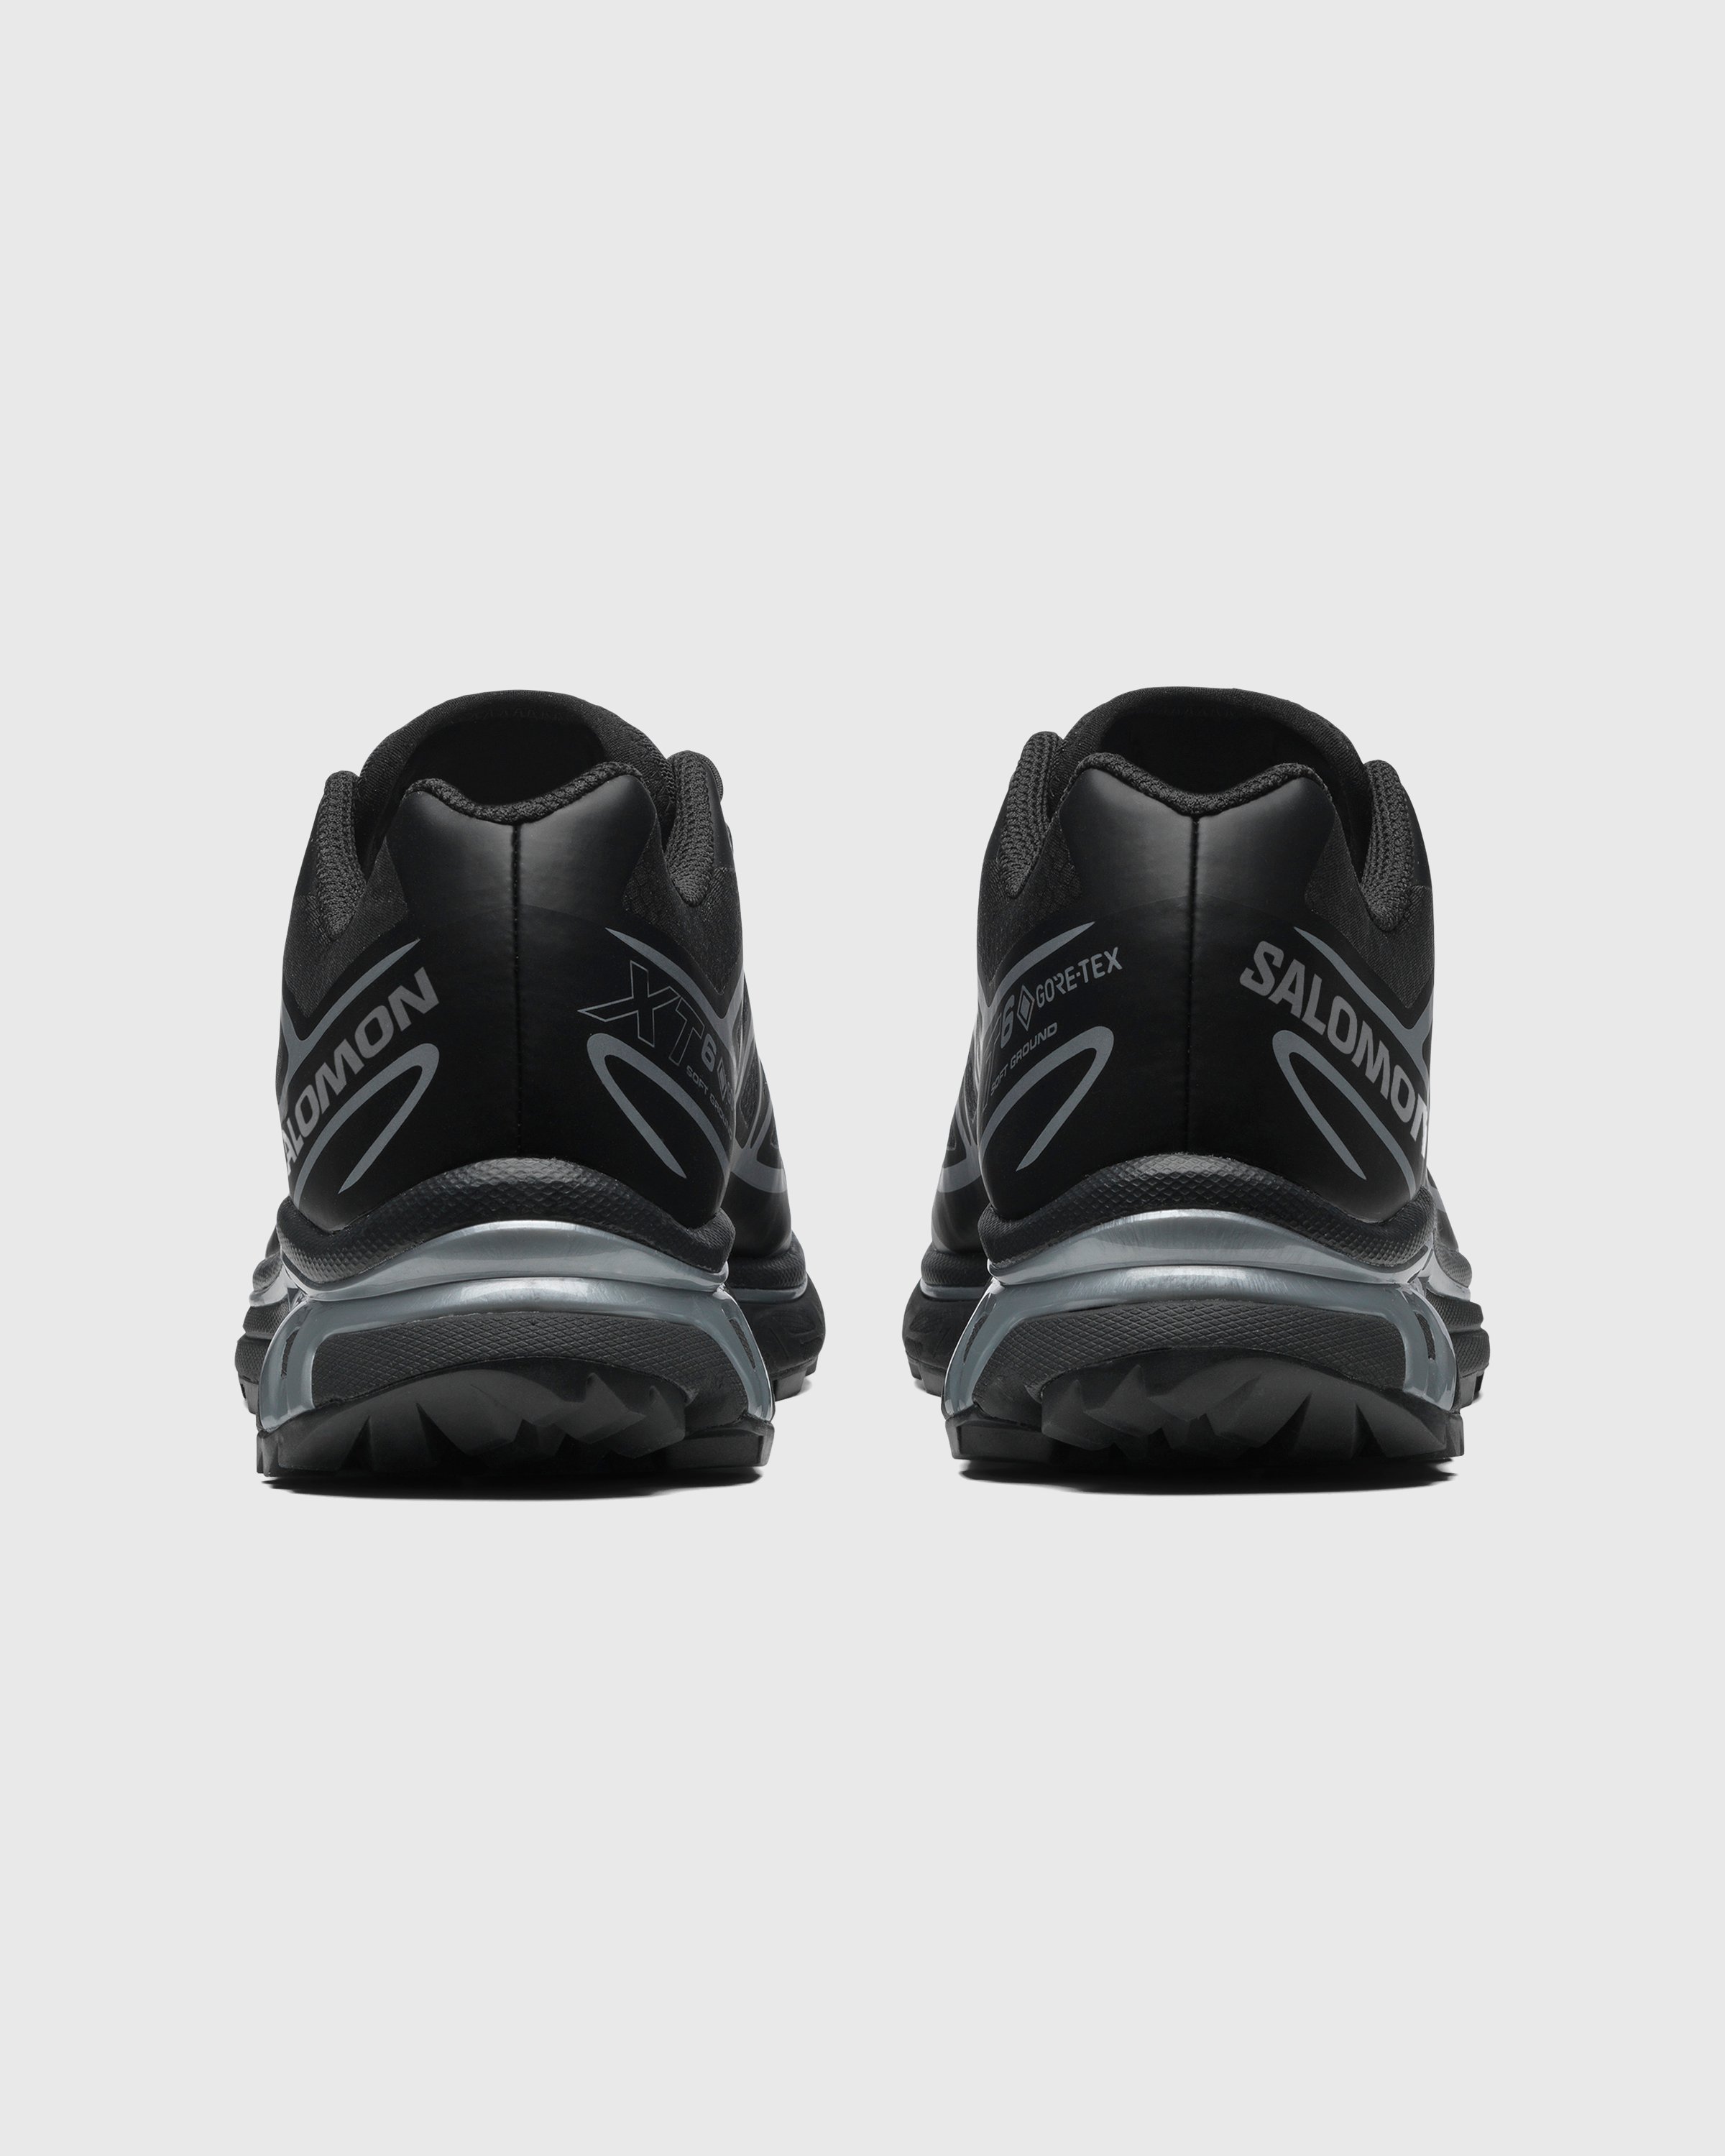 Salomon - XT-6 GTX Black/Black/Ftw Silver - Footwear - Black - Image 3